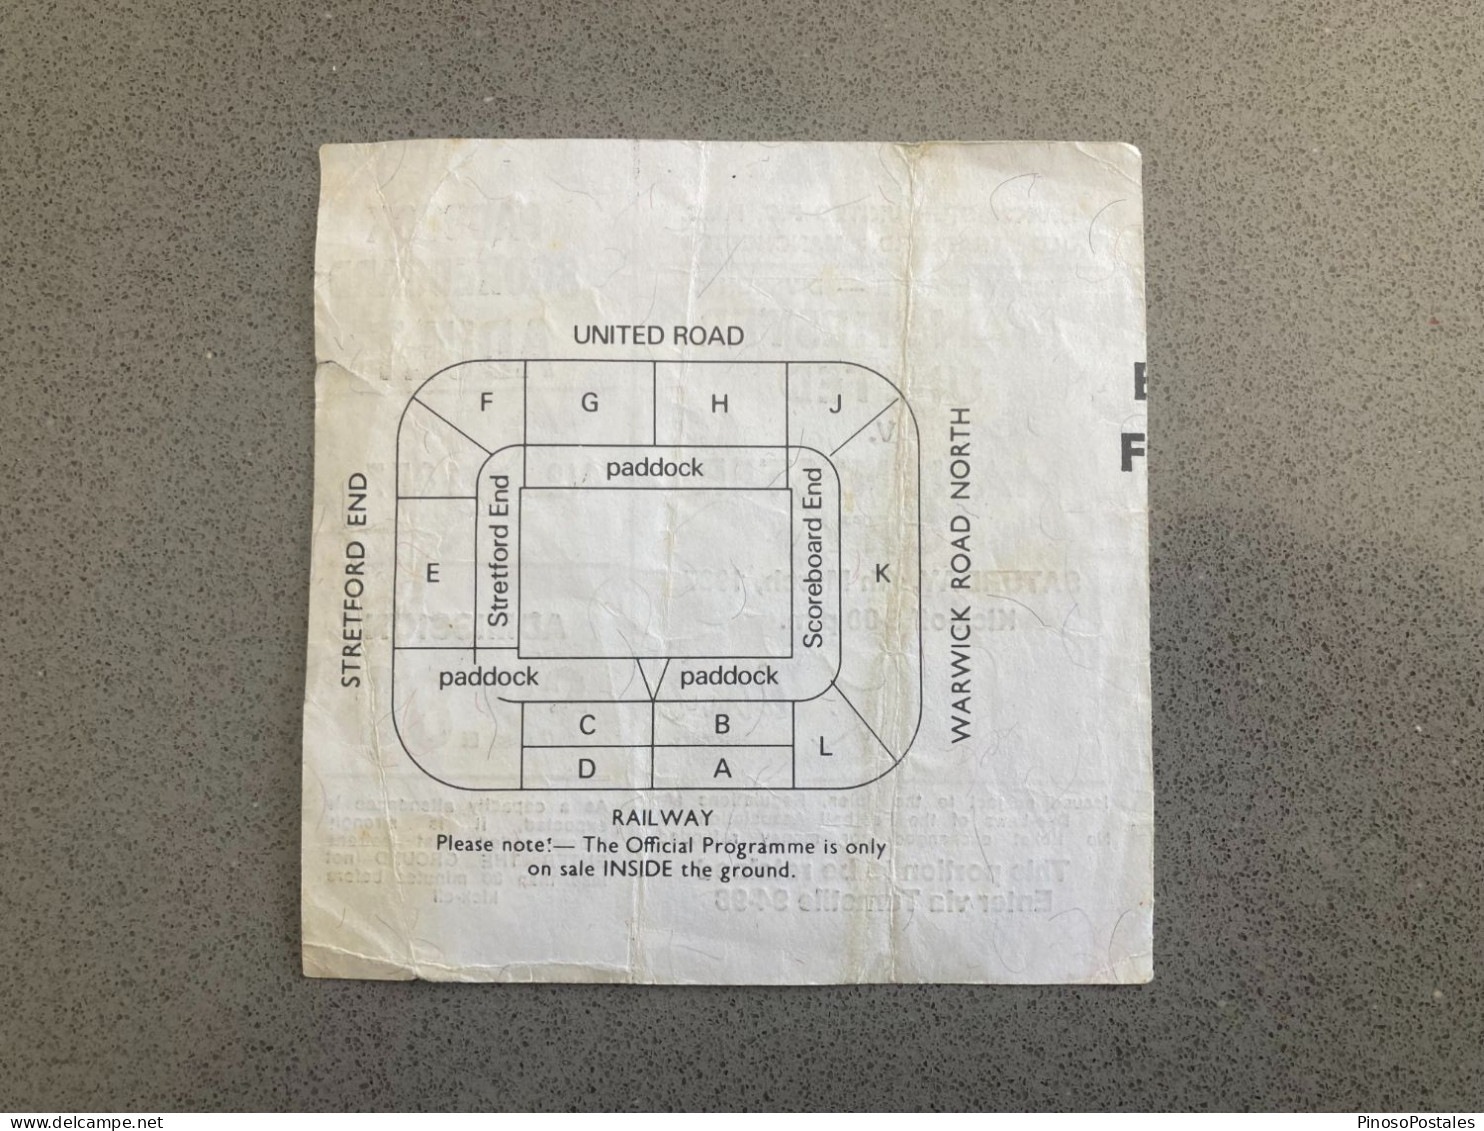 Manchester United V Manchester City 1986-87 Match Ticket - Biglietti D'ingresso